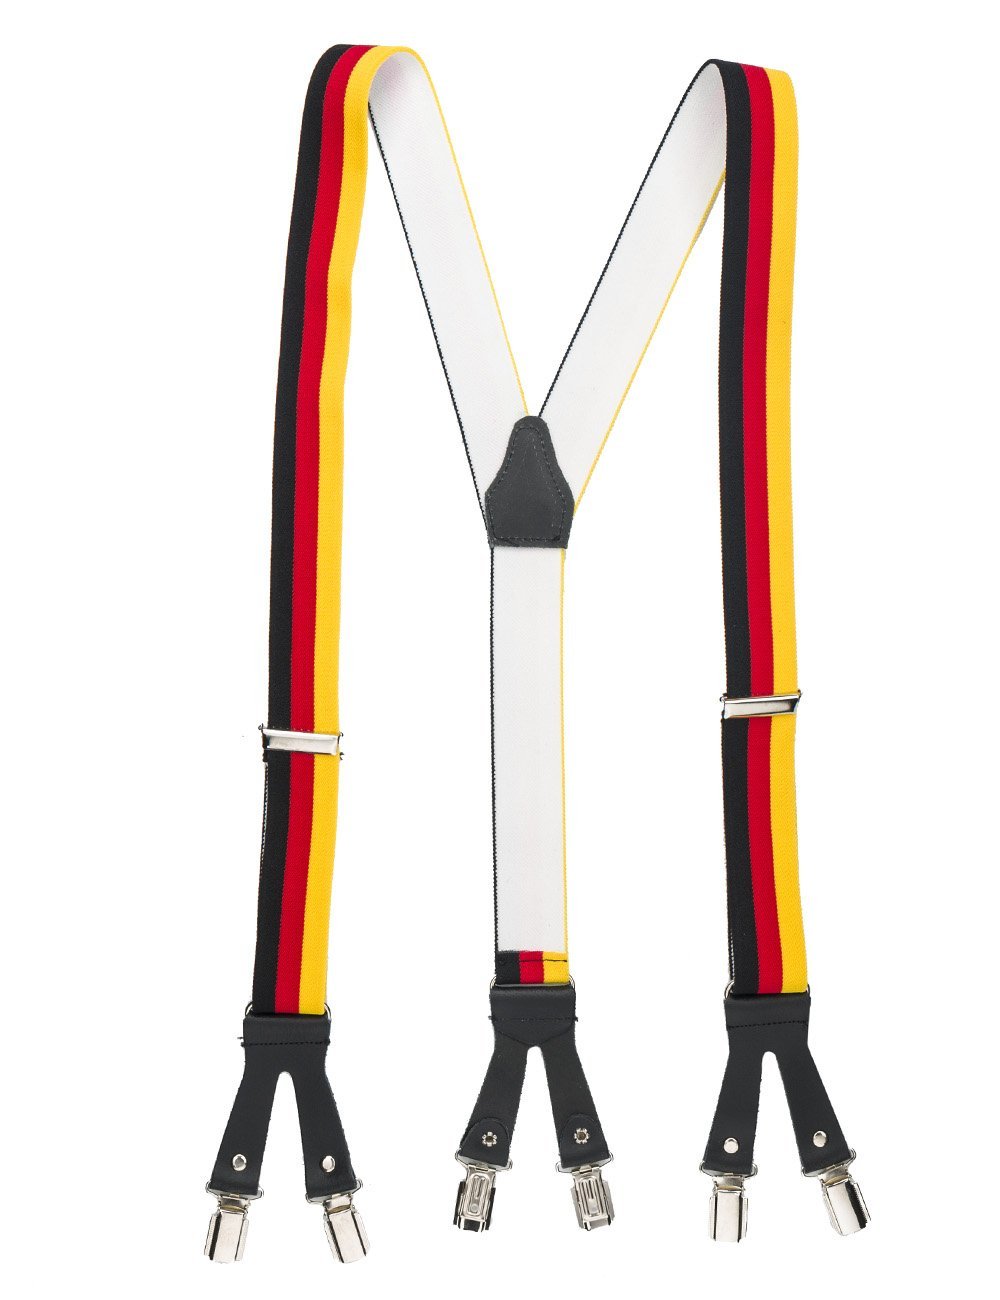 [Australia] - Shenky German Sexy Leather Braces 6 Clips Suspenders 6 Button Holes Carnival Oktoberfest Germany 